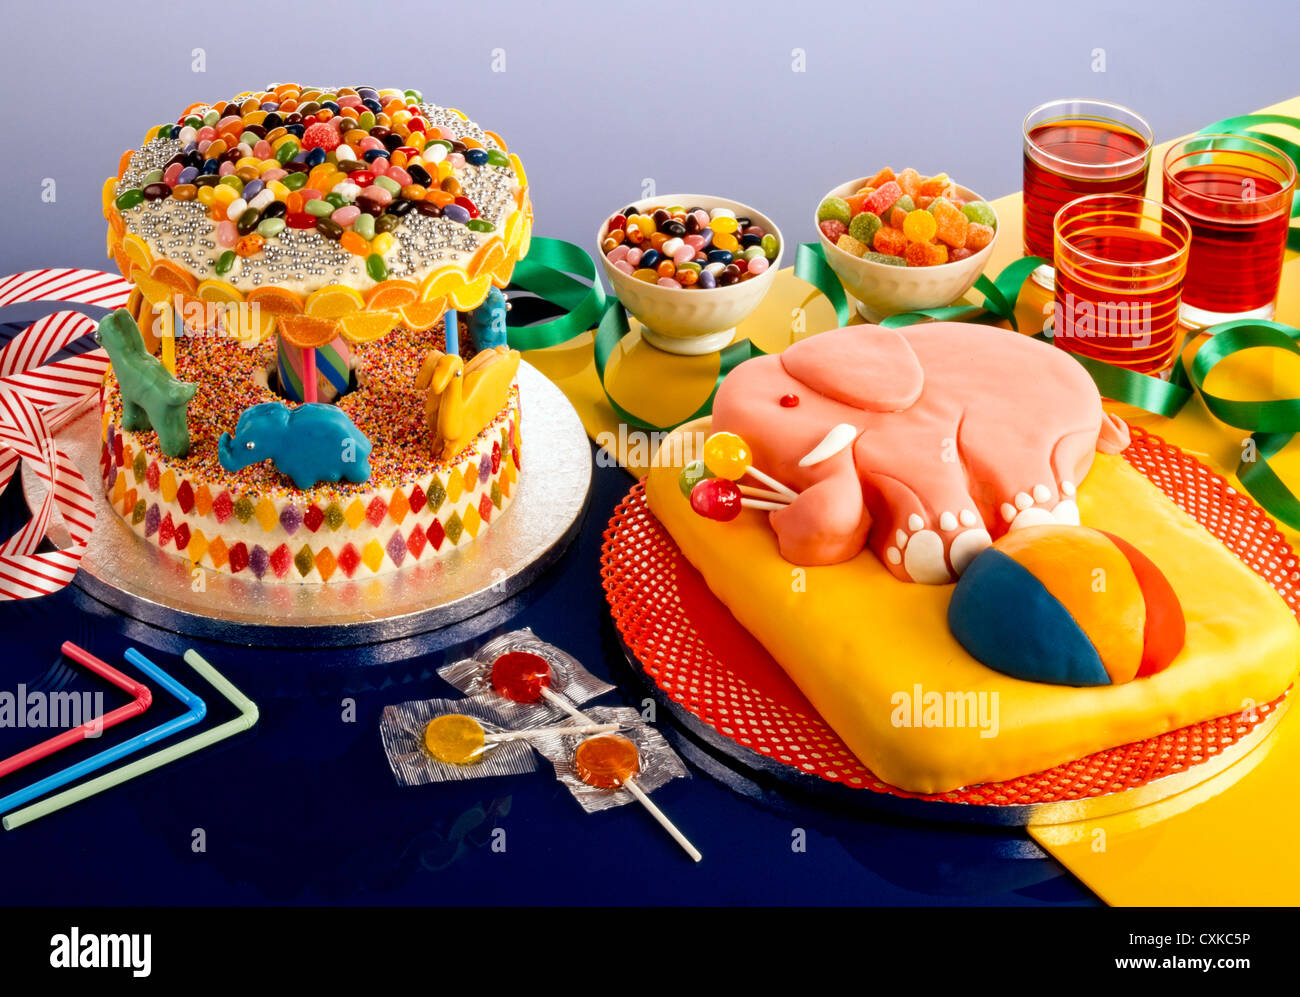 CHILDREN'S BIRTHDAY PARTY CAKES Stock Photo